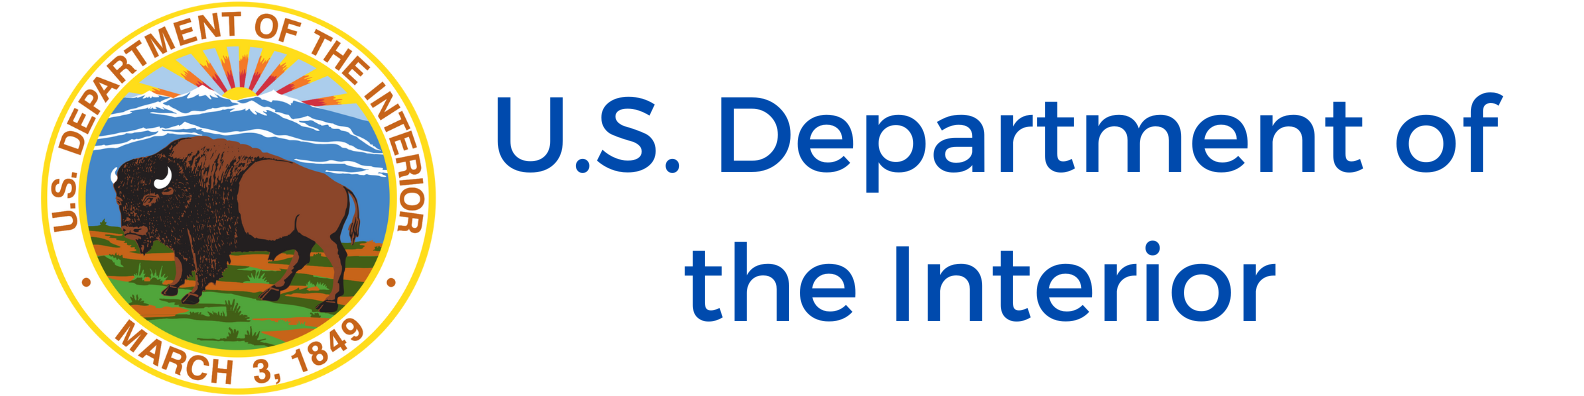 US Depart of Interior.png